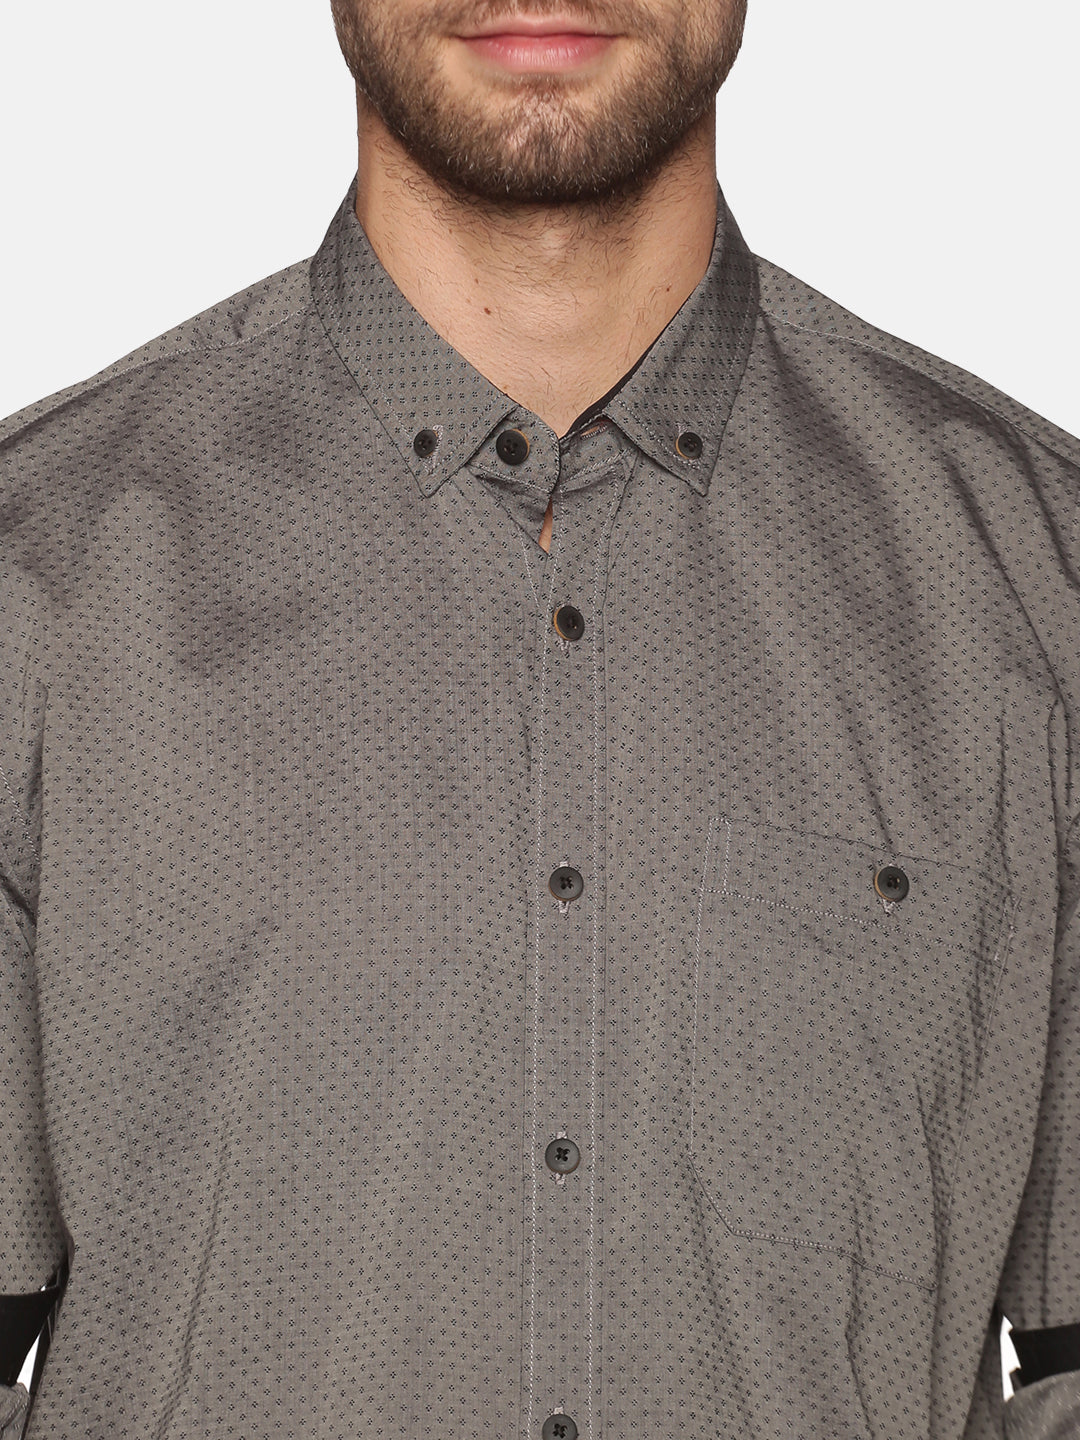 Don Vino Men's Brown Printed Full Sleeve Casual Shirt